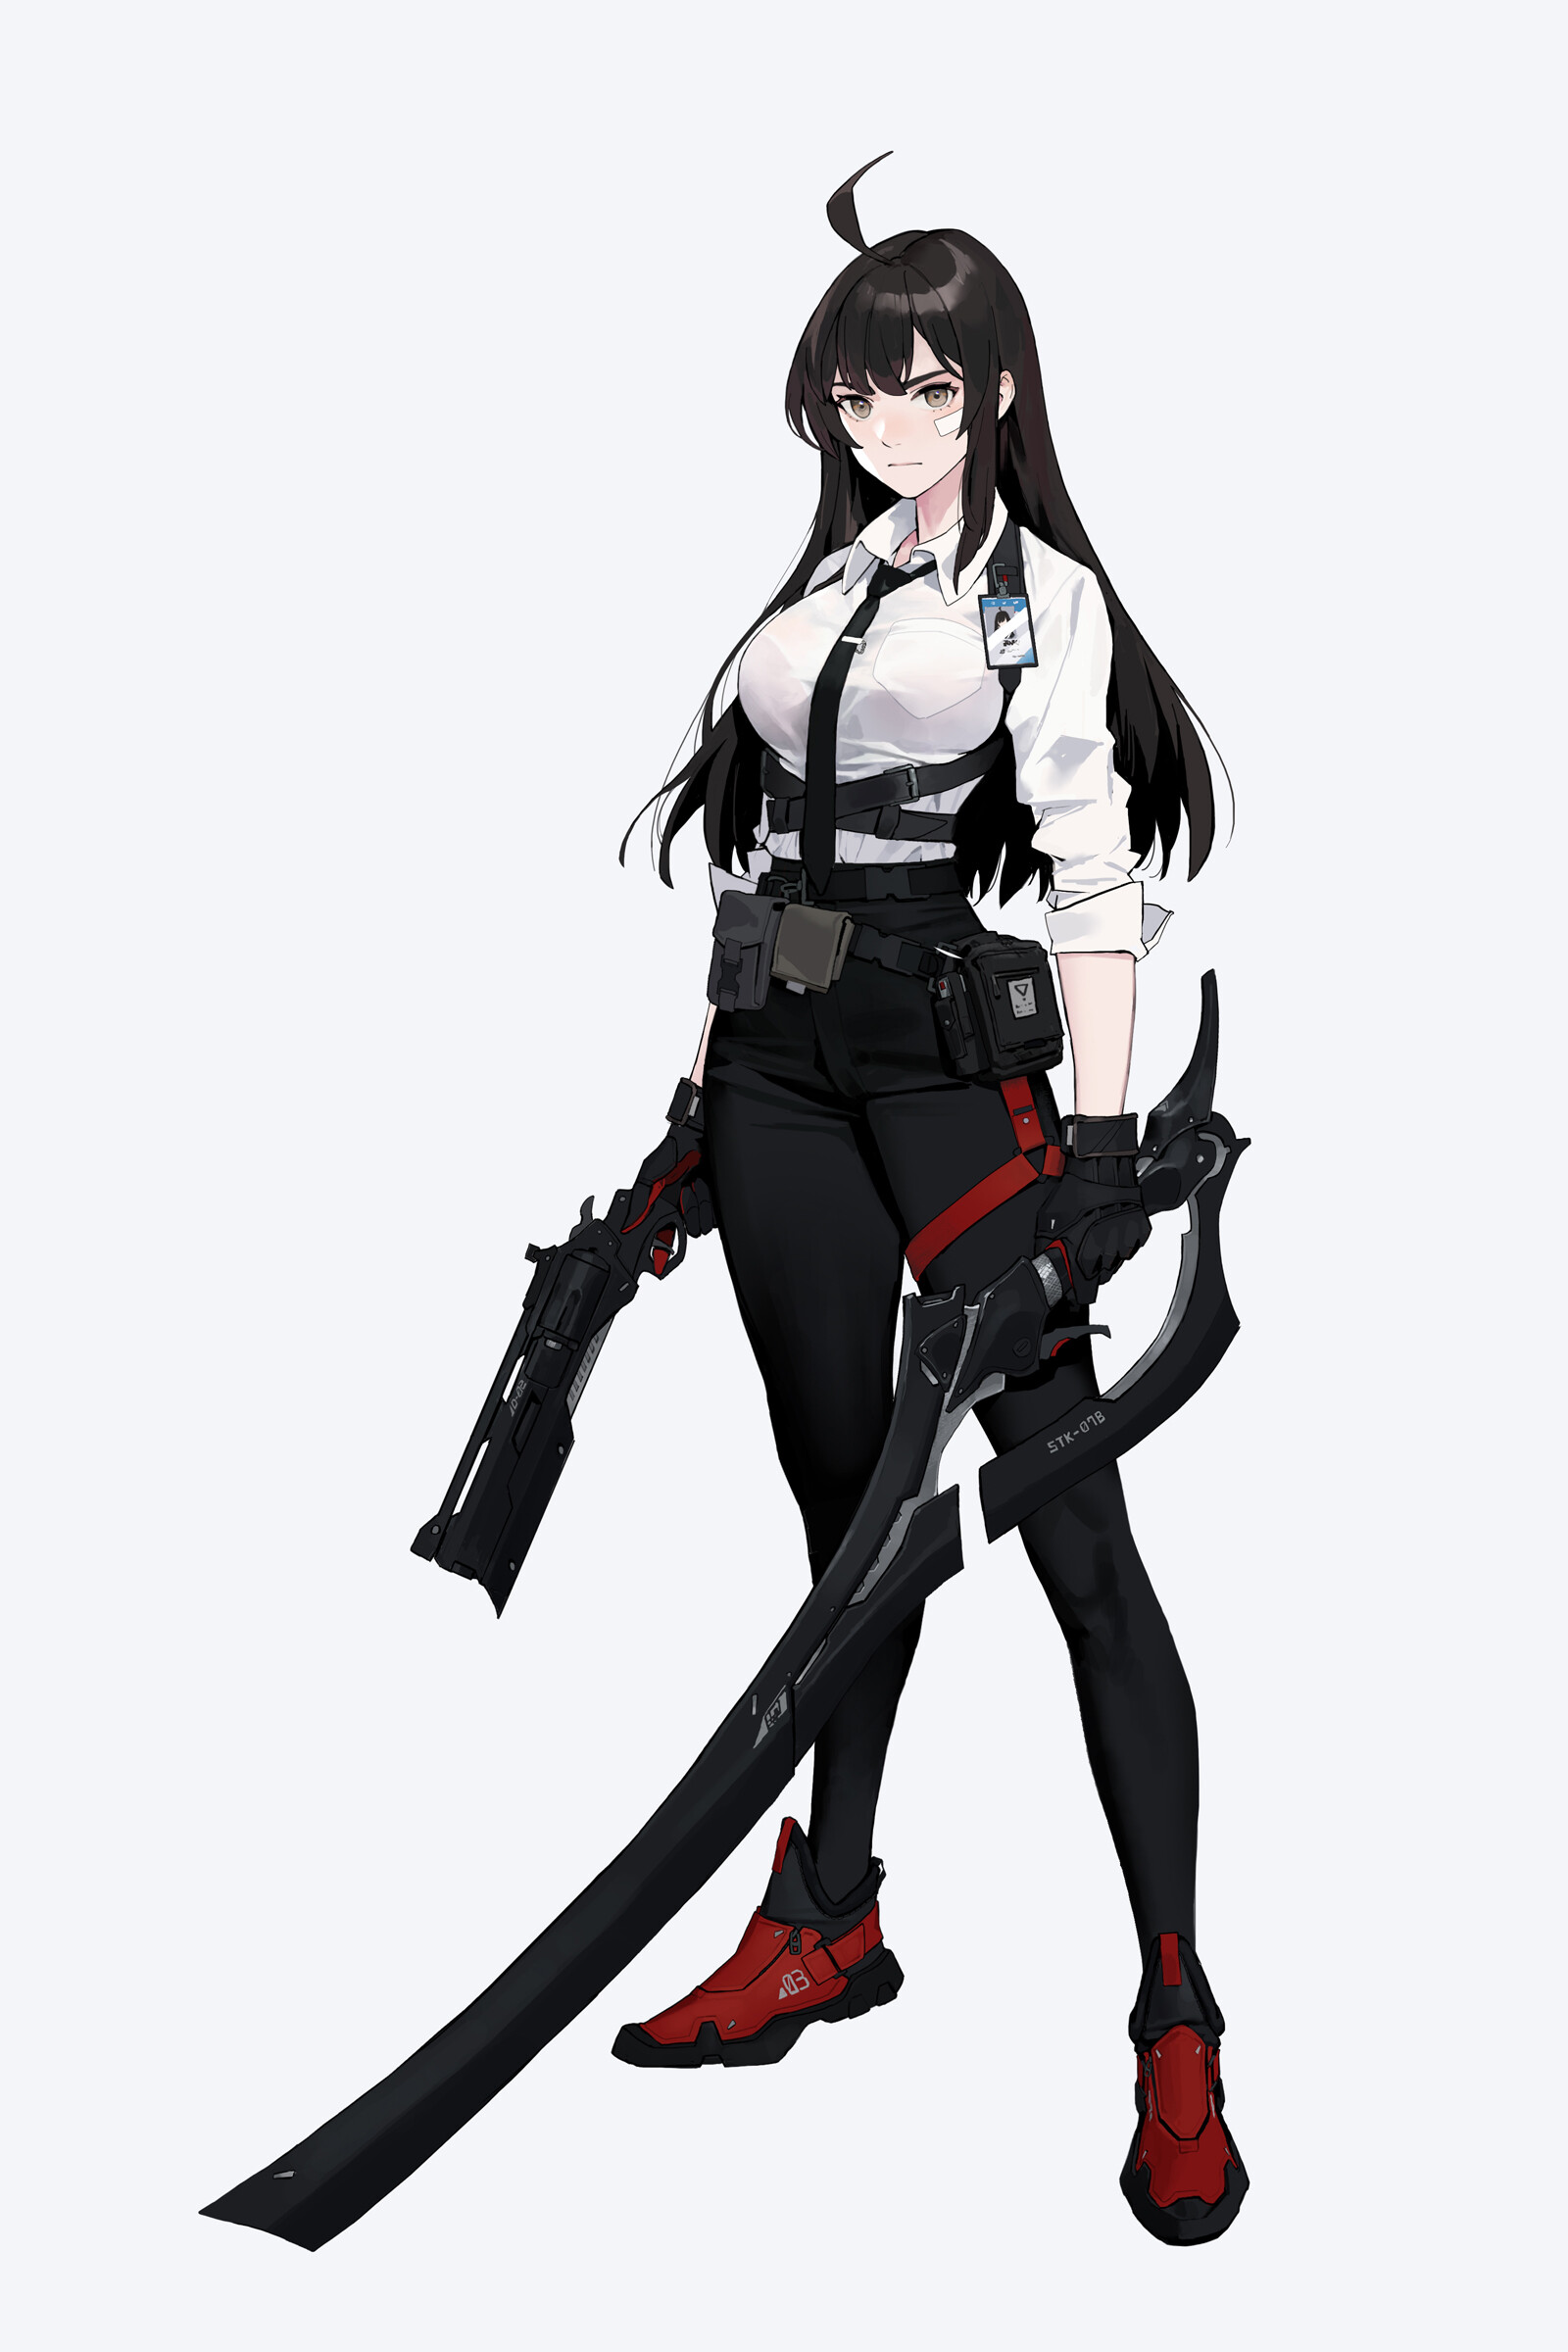 Anime 1600x2400 DHK drawing women dark hair long hair weapon gun blades holster shirt white background simple background minimalism